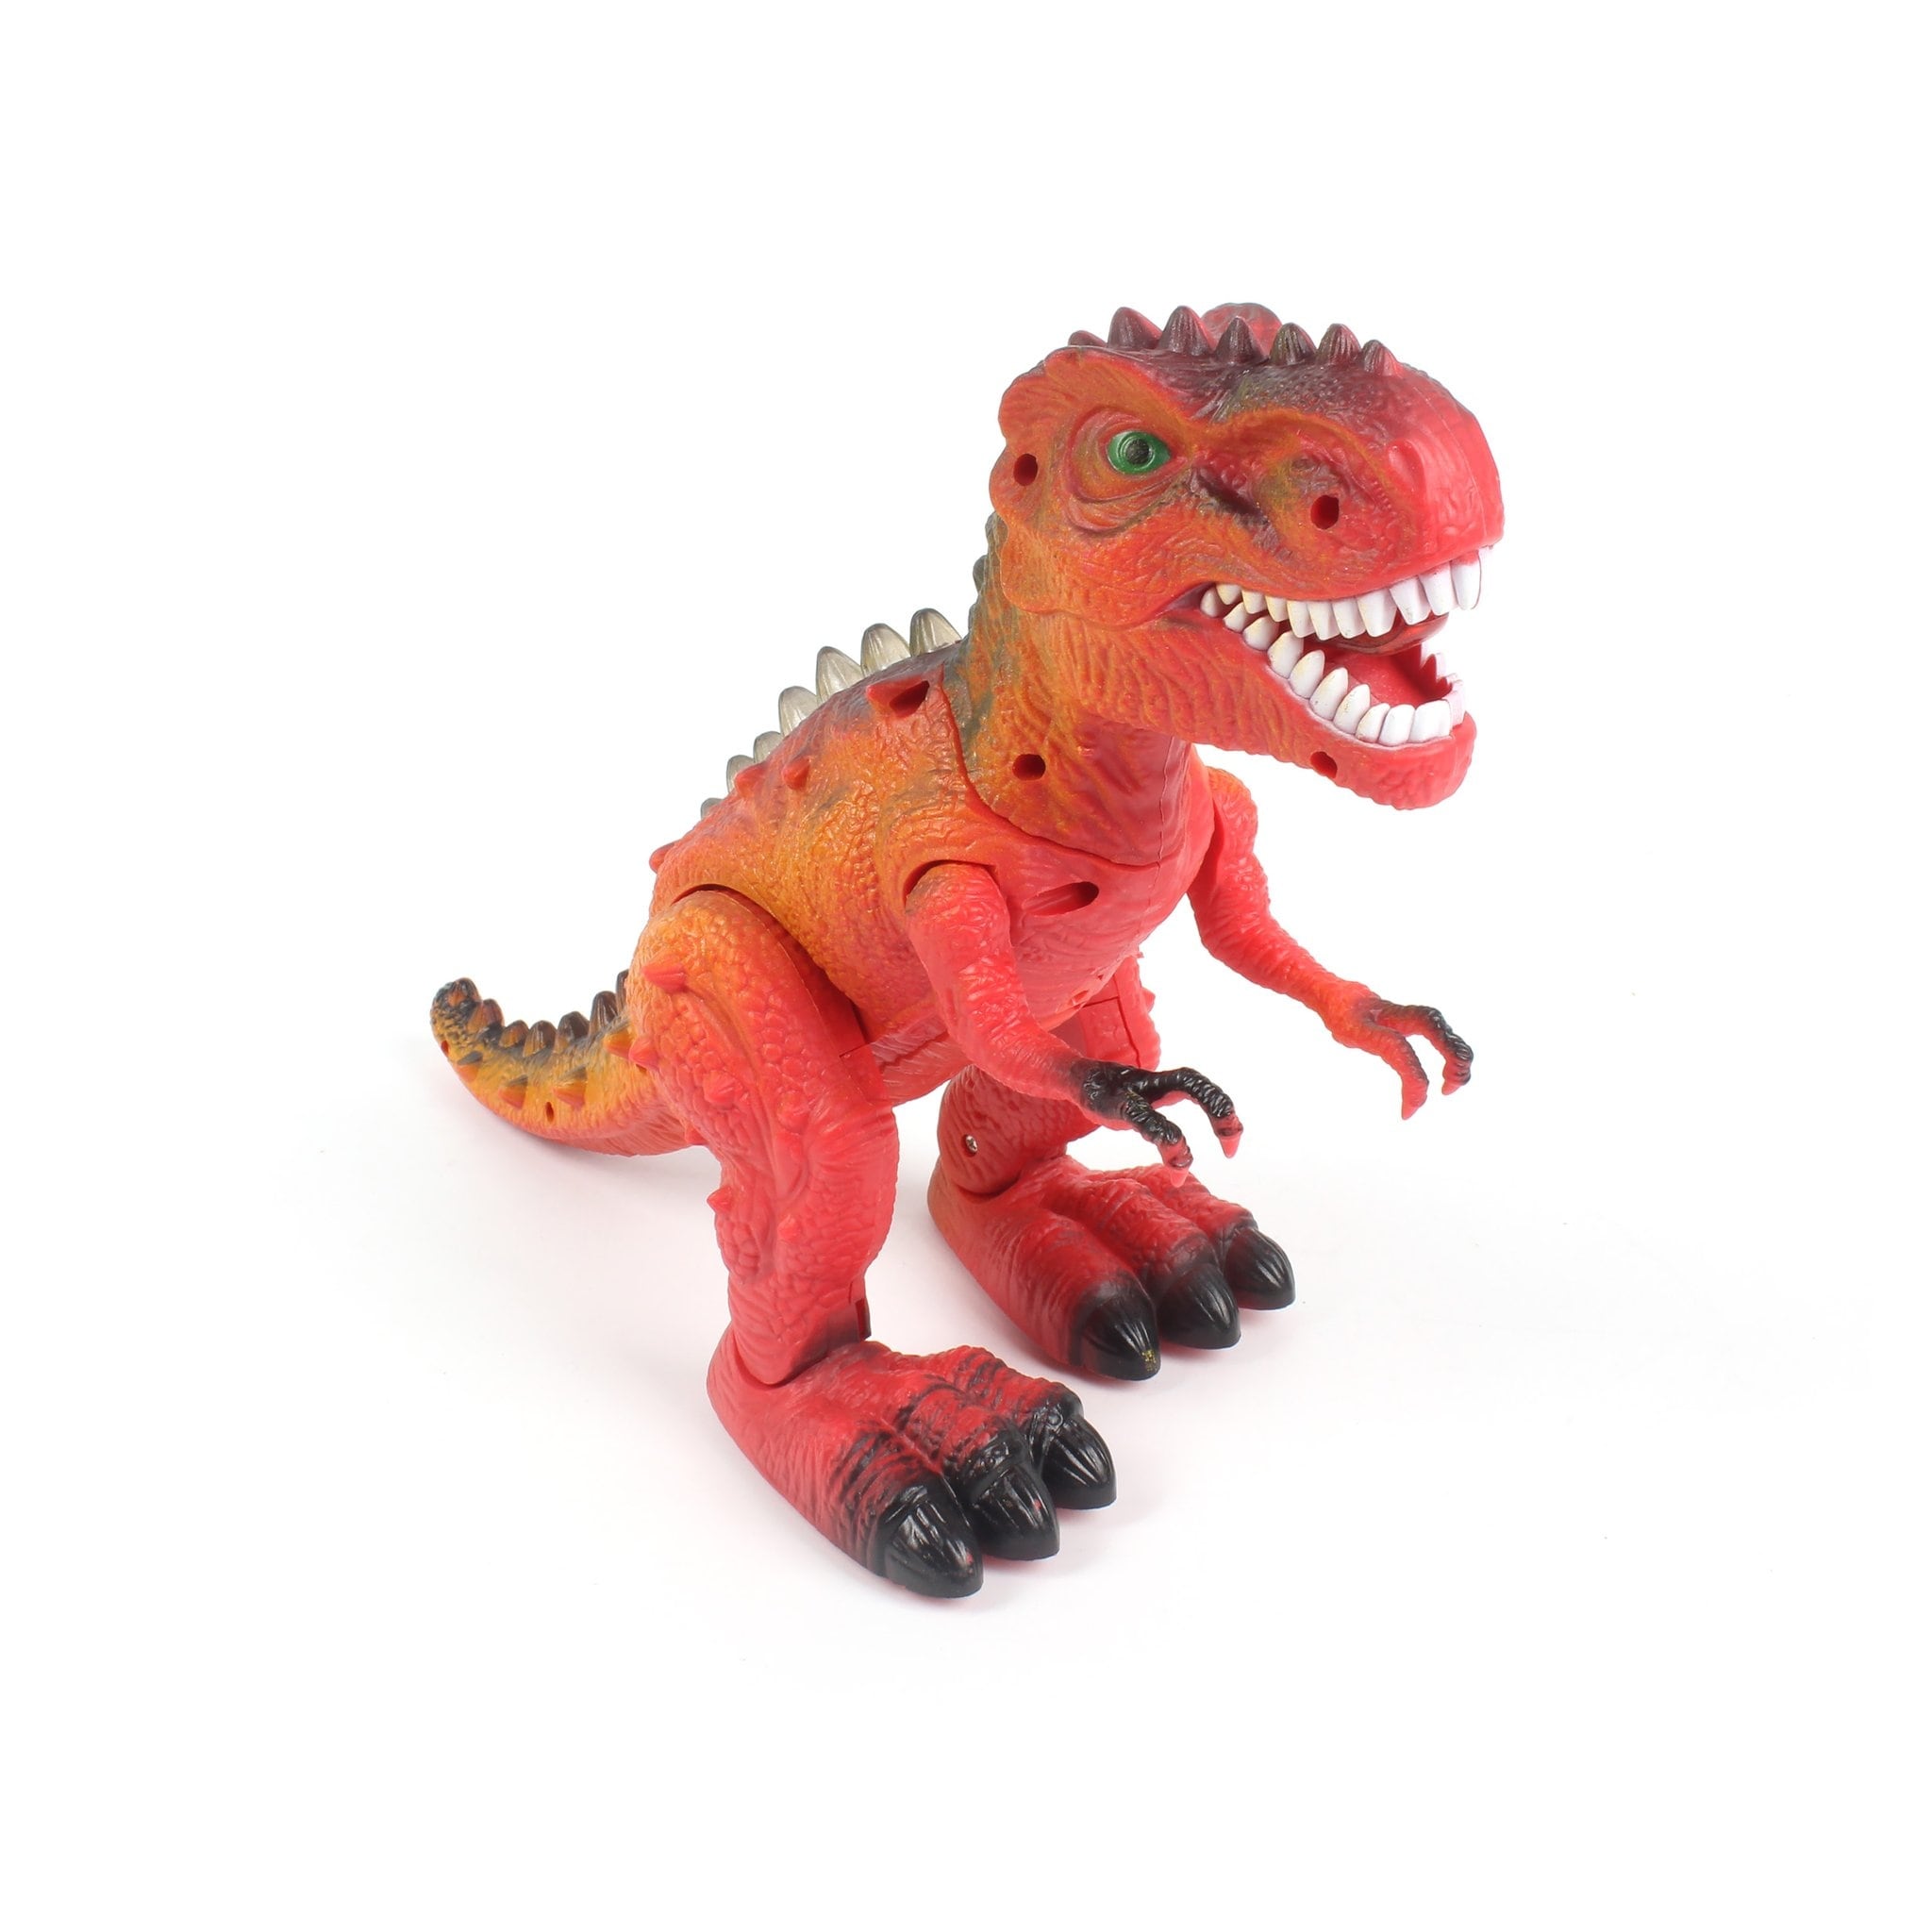 Clay Dinosaur Toys Set - Green - Bed Bath & Beyond - 31584433